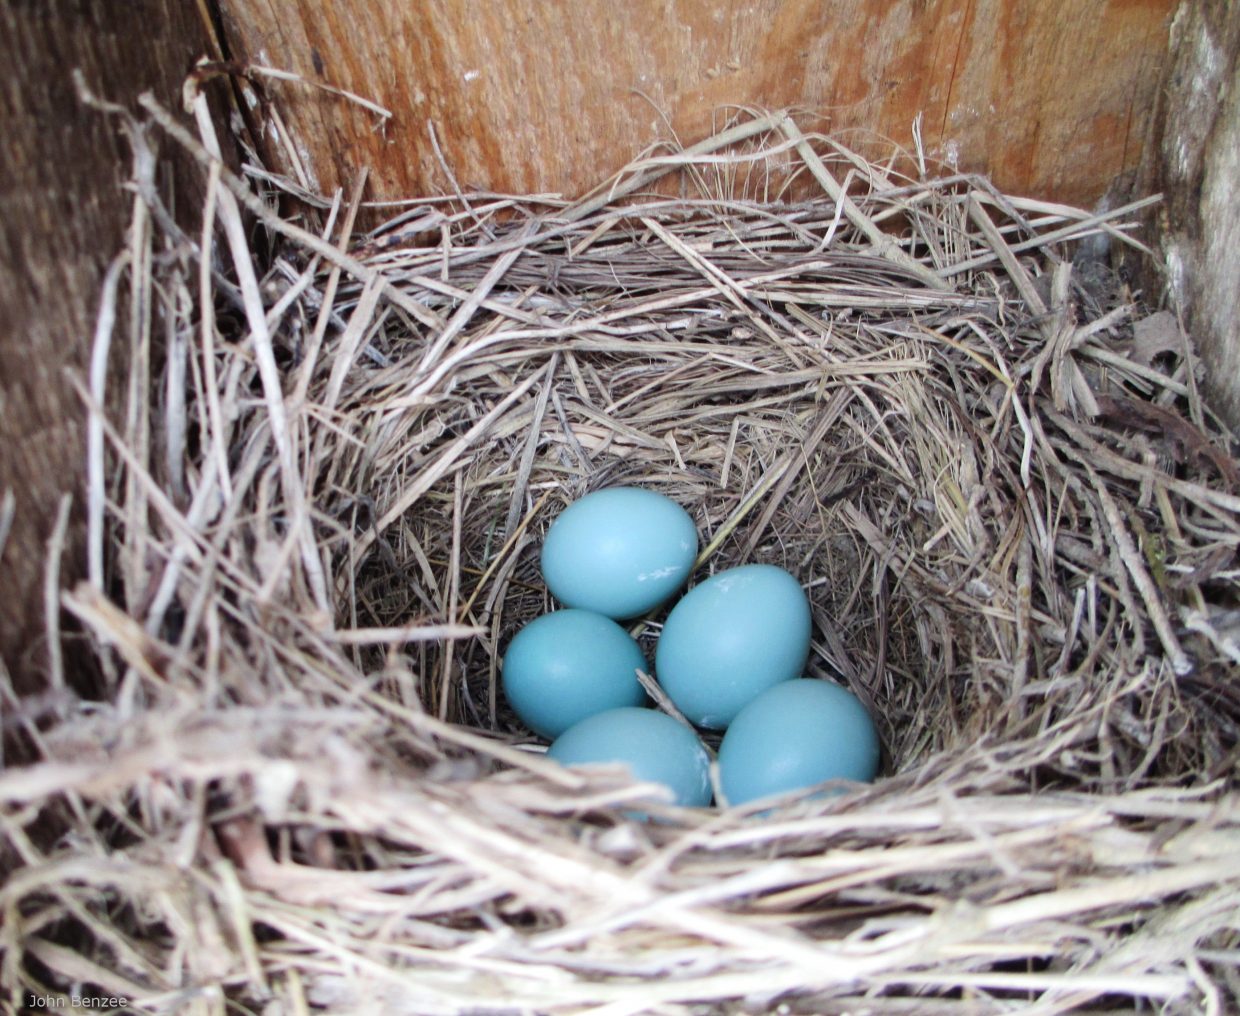 Bluebird eggs in nest. © John Benzee